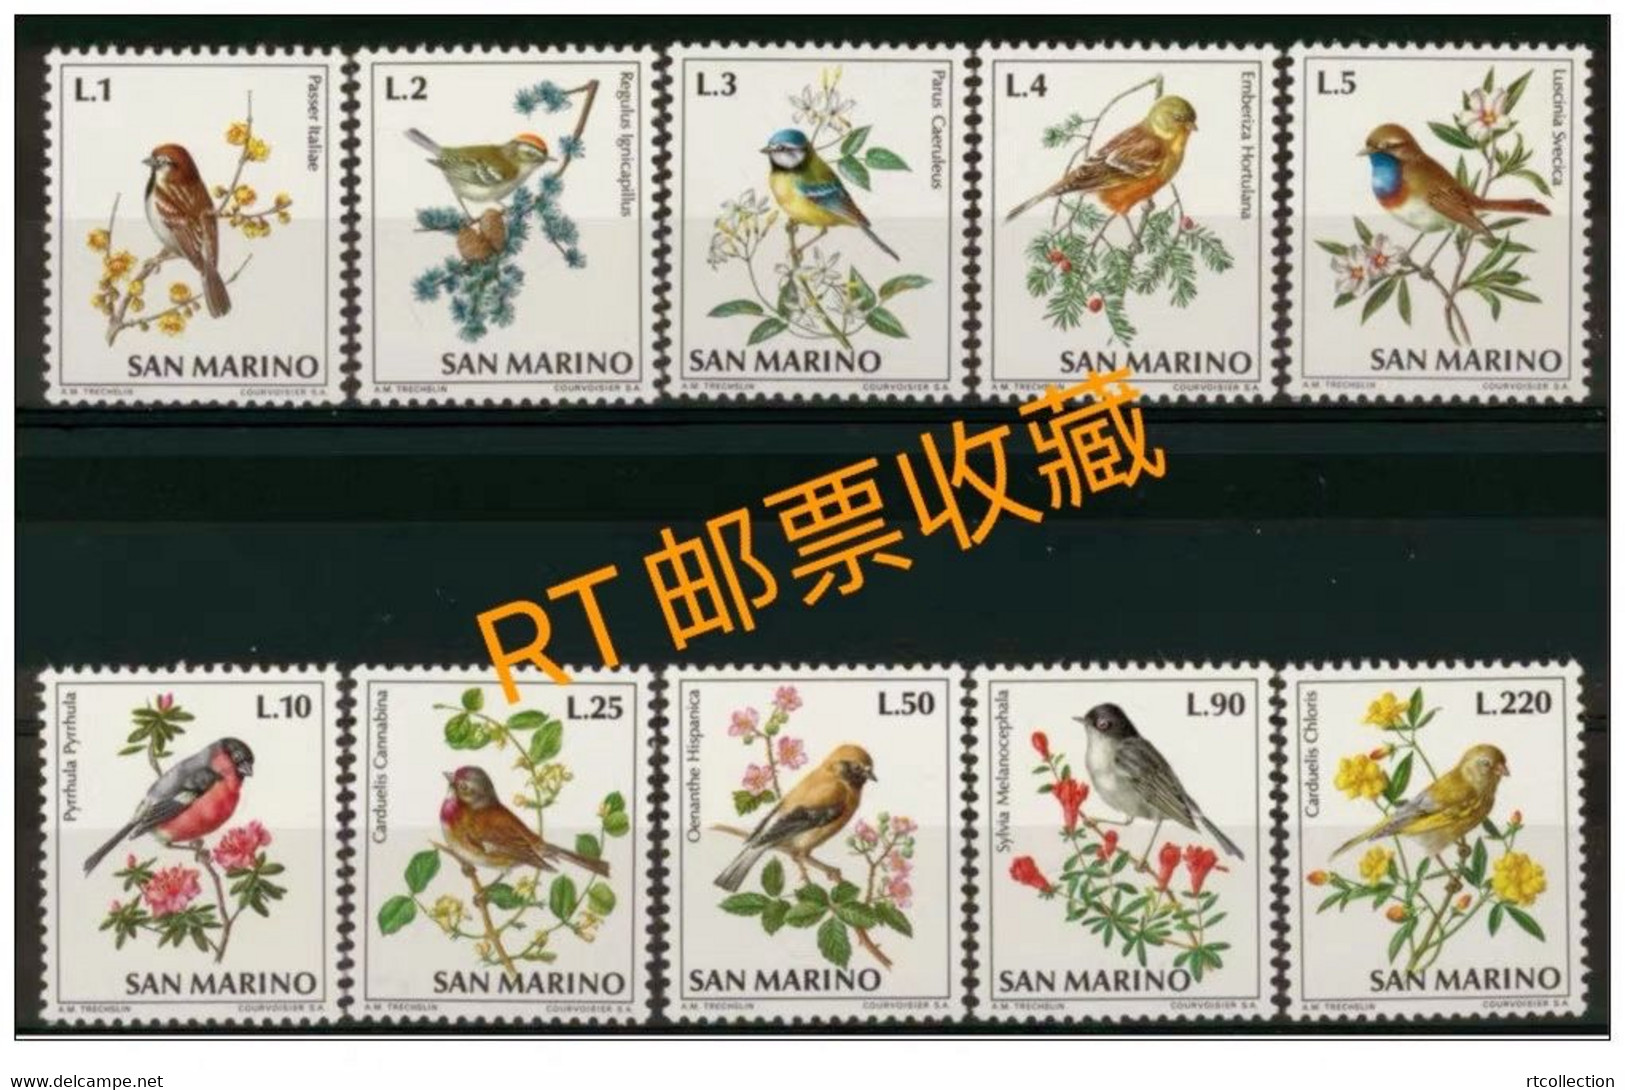 San Marino 1972 Song Birds Nature Flowers Plants Bird Flora Plant Fauna Songbirds Sparrows Stamps MNH Scott 777-786 - Passeri